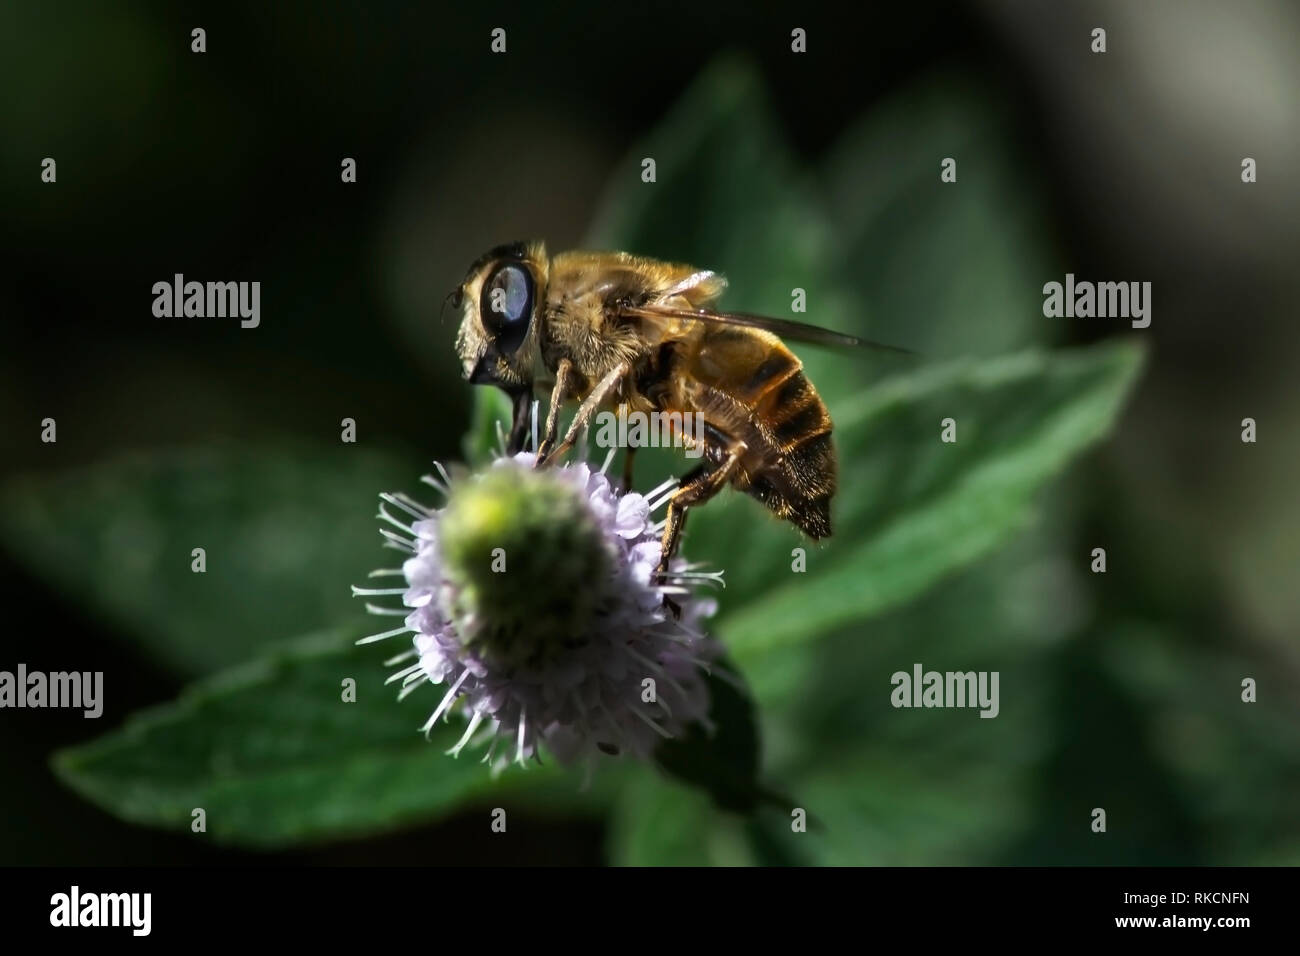 Honey bee feeding from a Buddleia flower Stock Photo